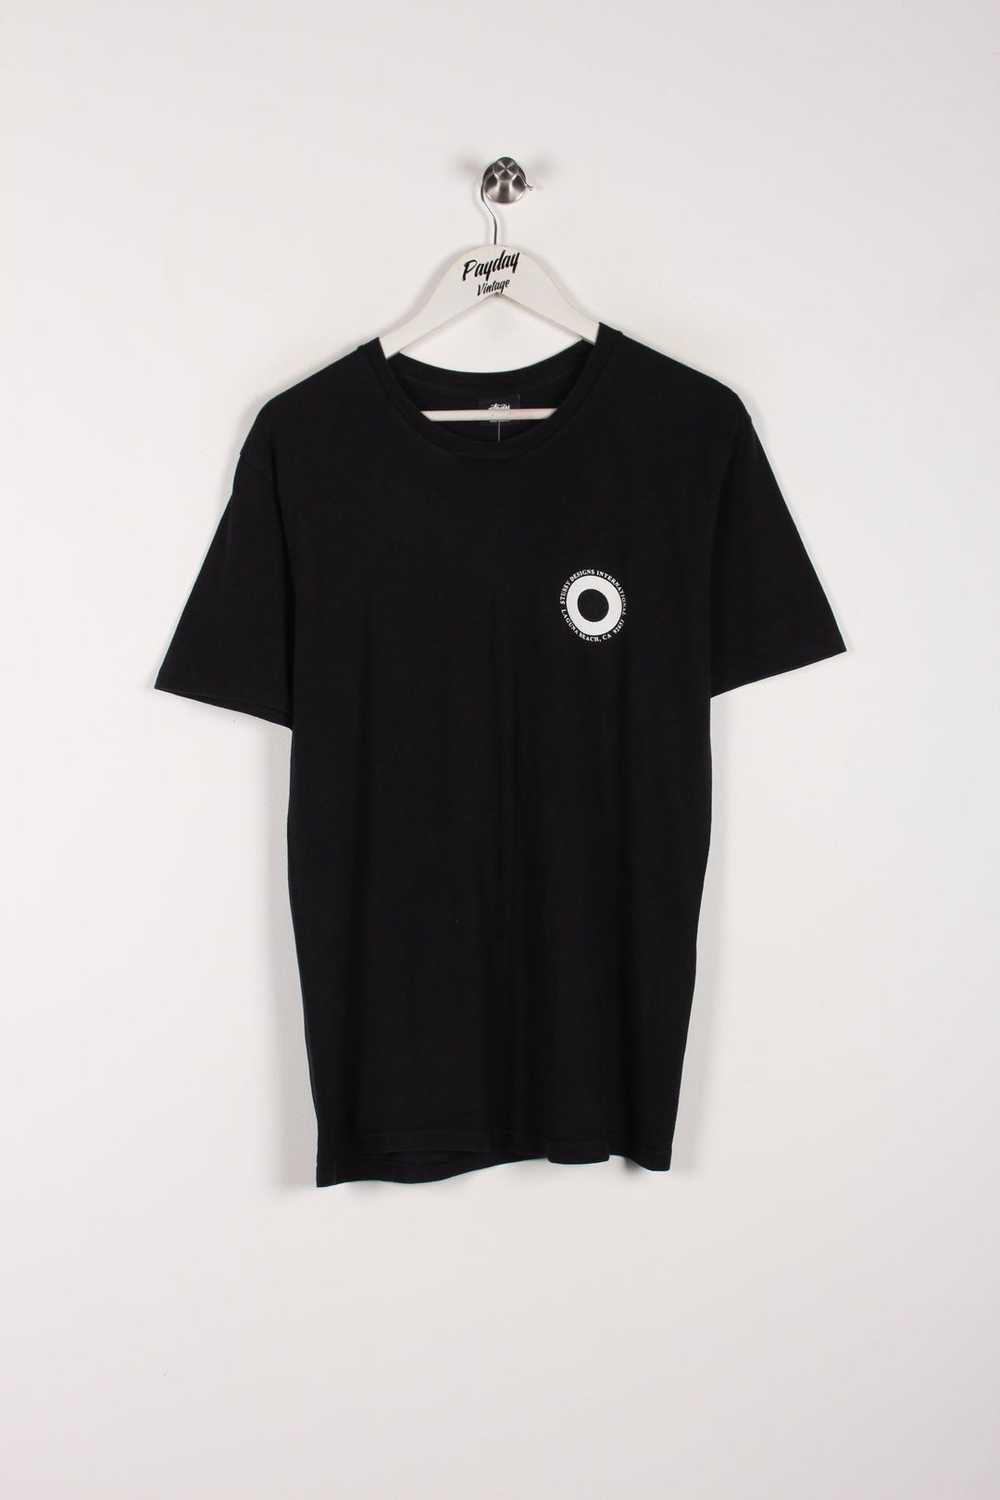 Stüssy Graphic T-Shirt Black Medium - image 1